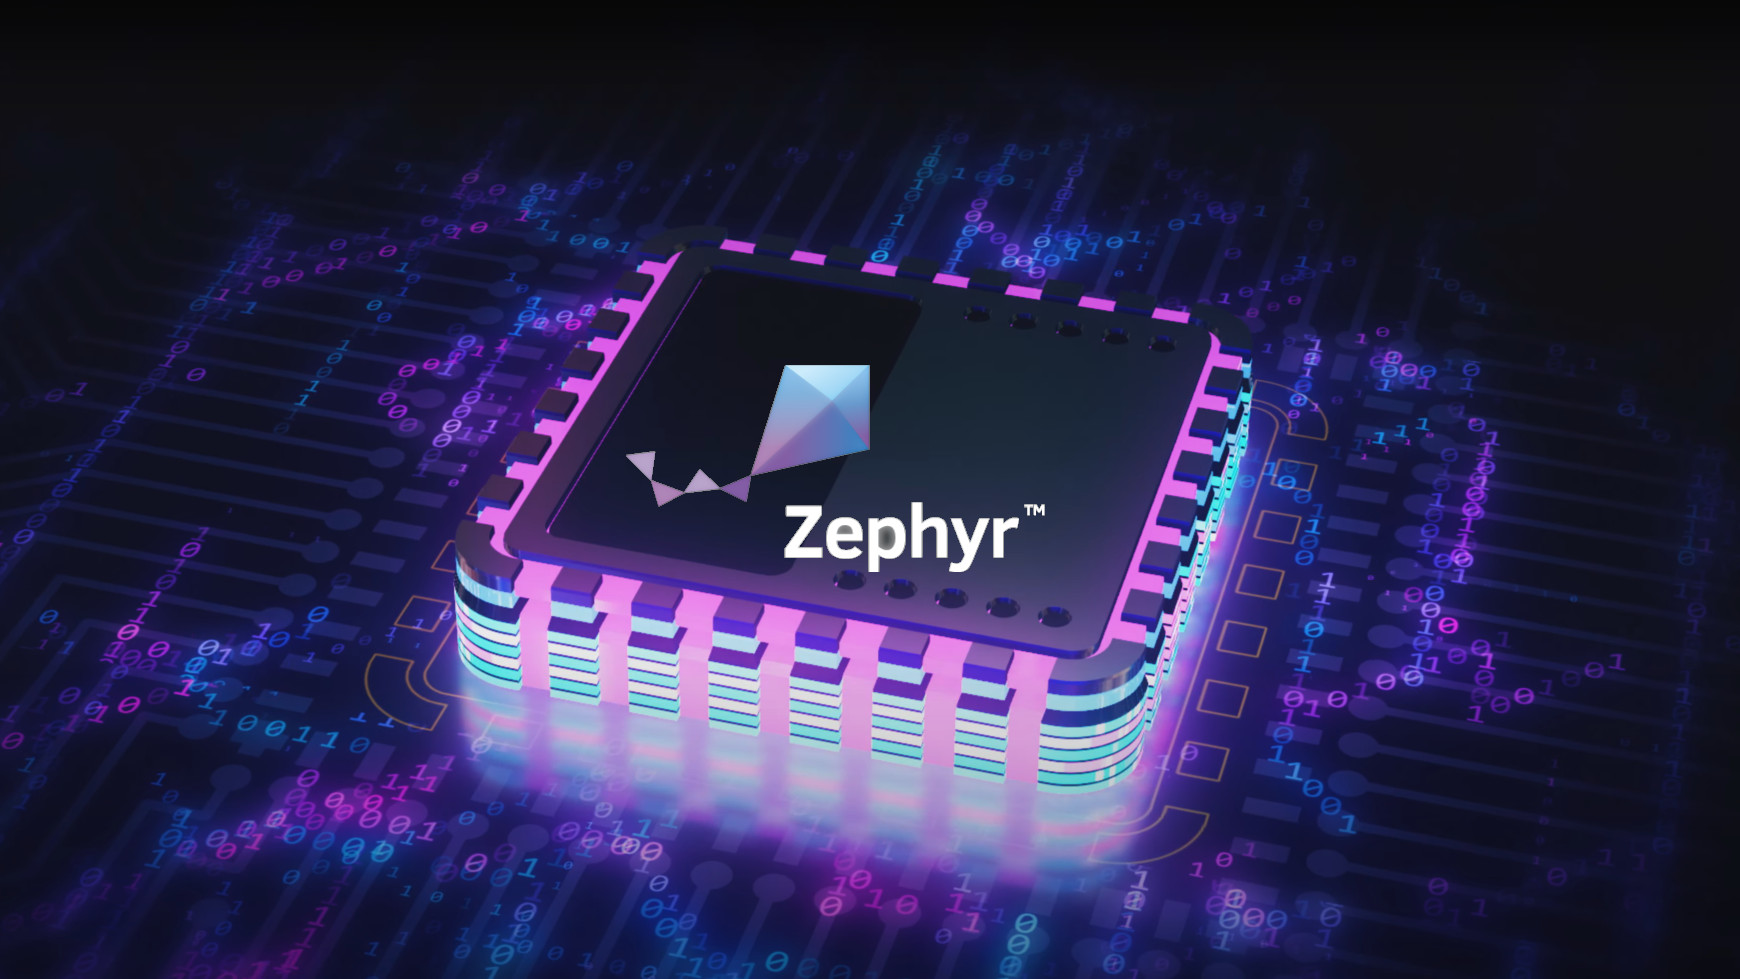 Zephyr RTOS fixes vulnerabilities with remote code execution potential